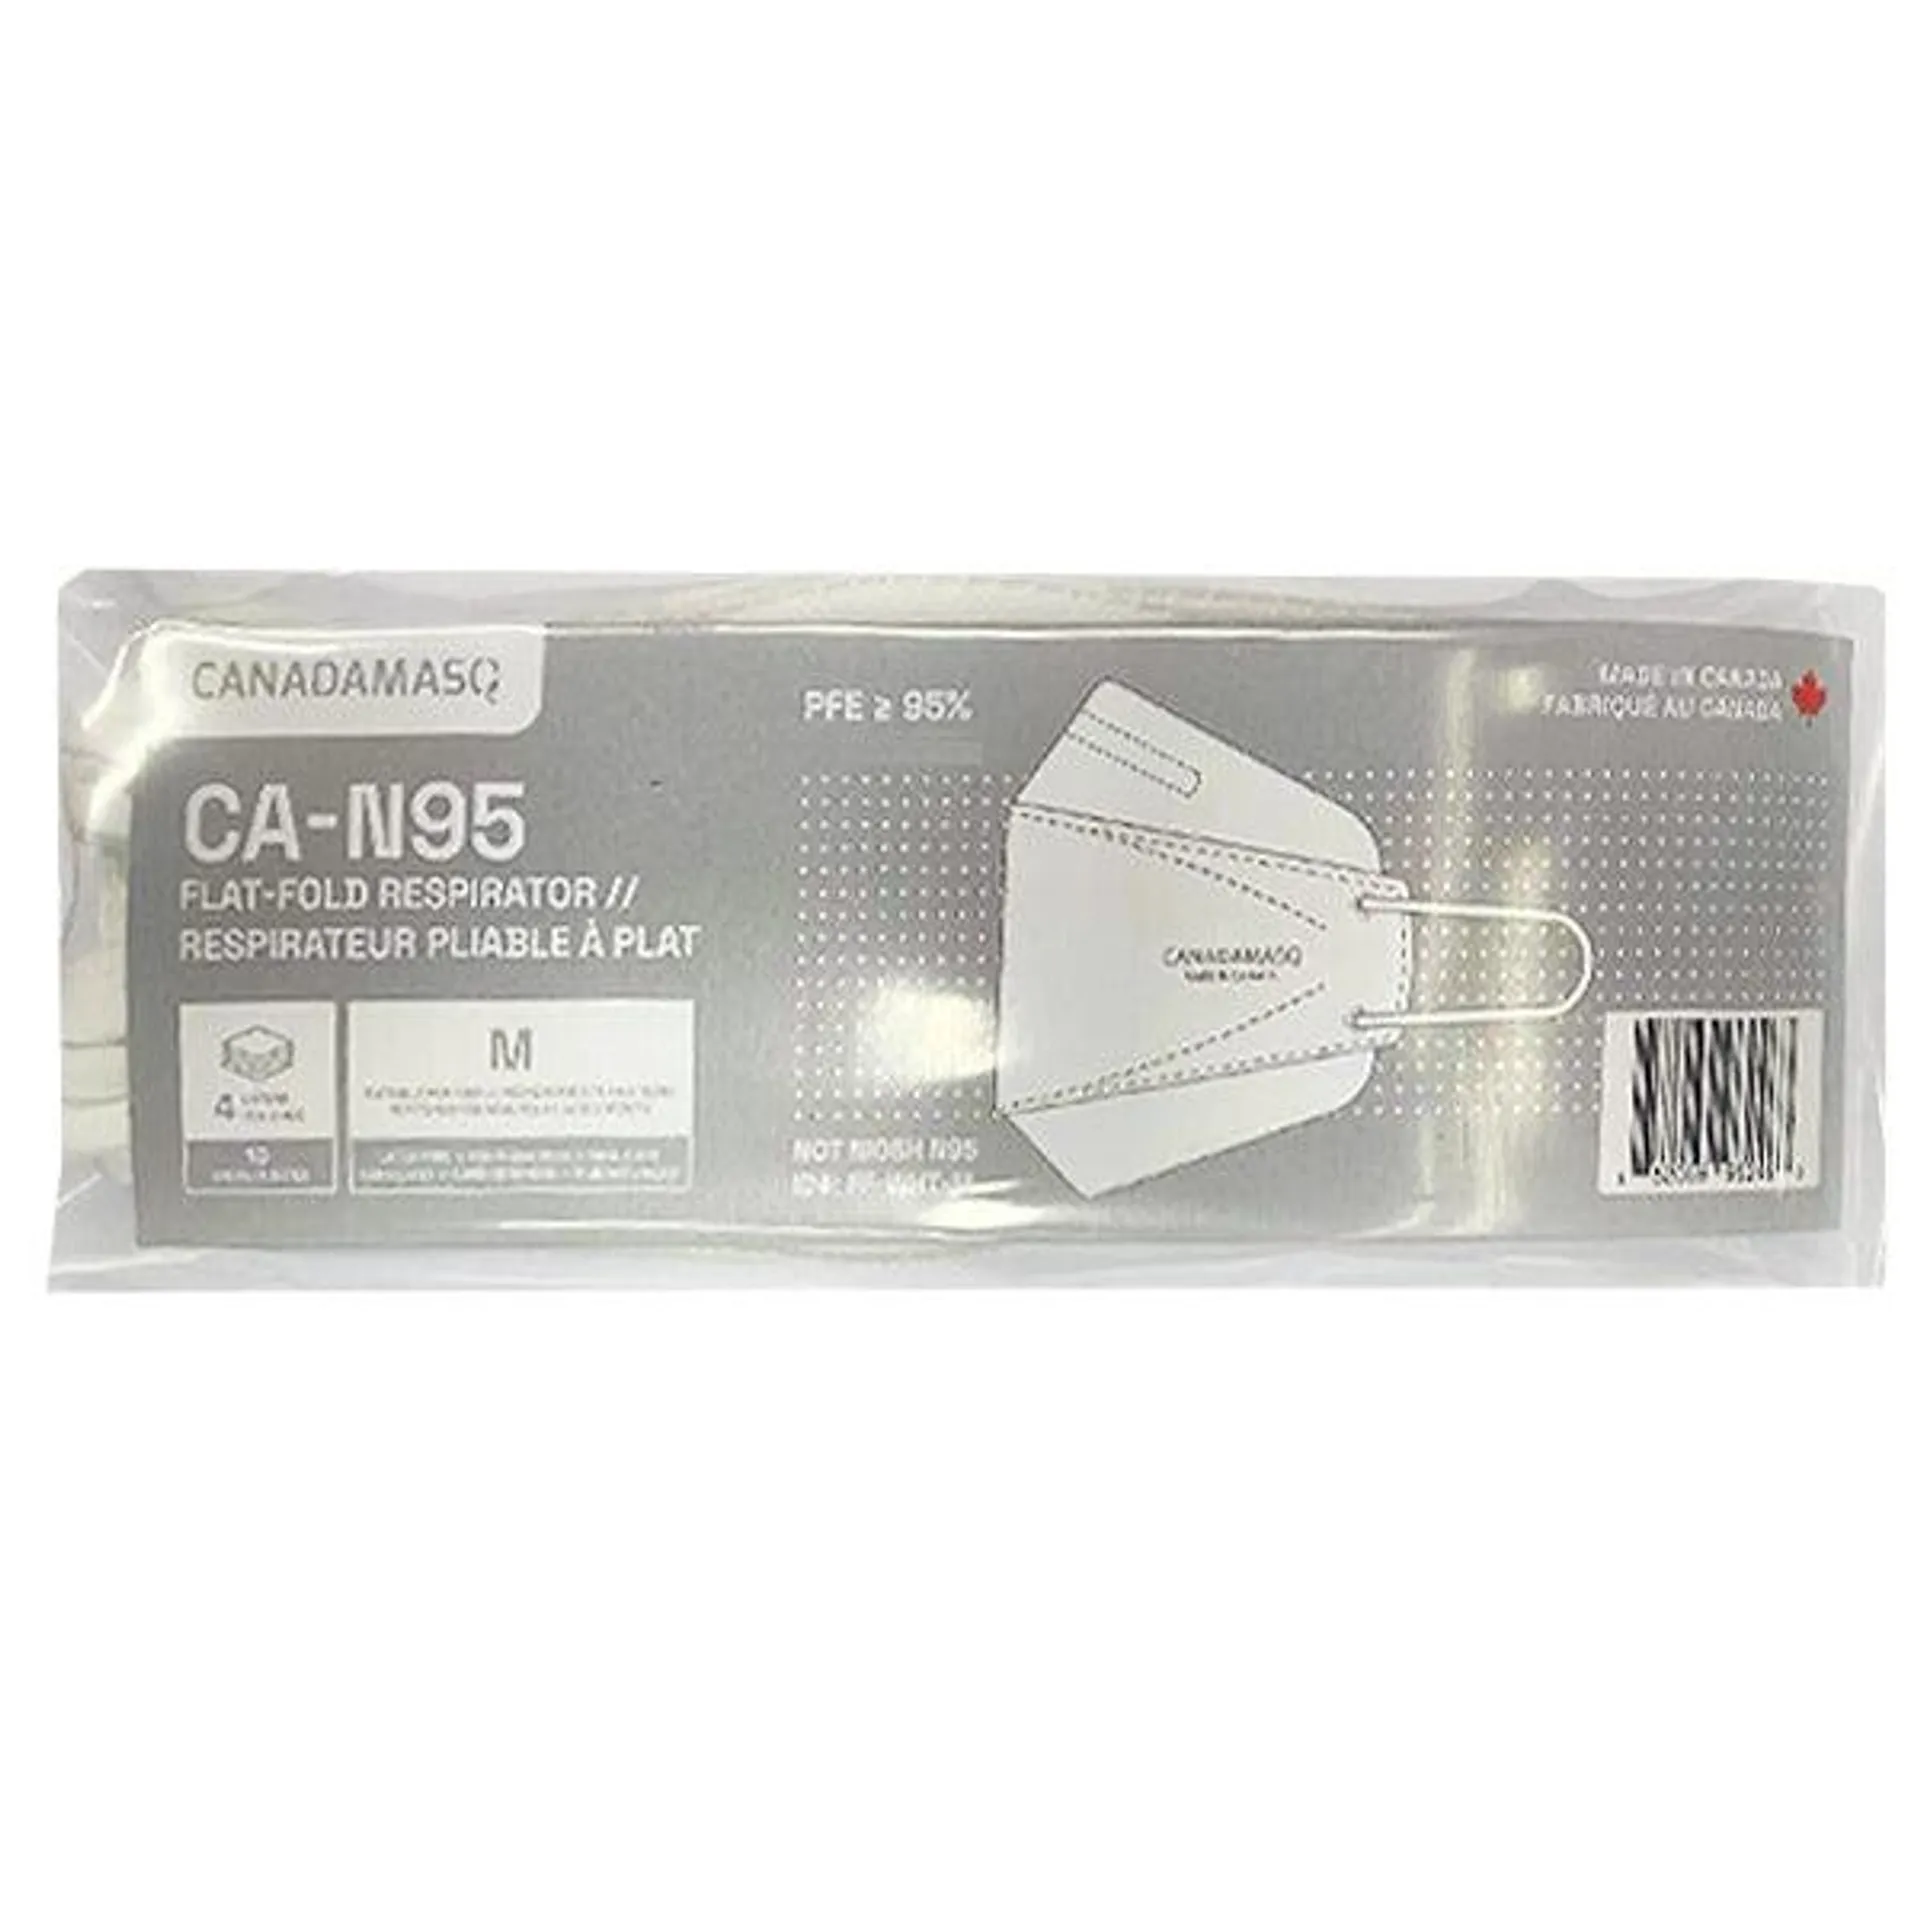 CA-N95 MEDIUM White Disposable Respirator Mask - Made in Canada 10pcs